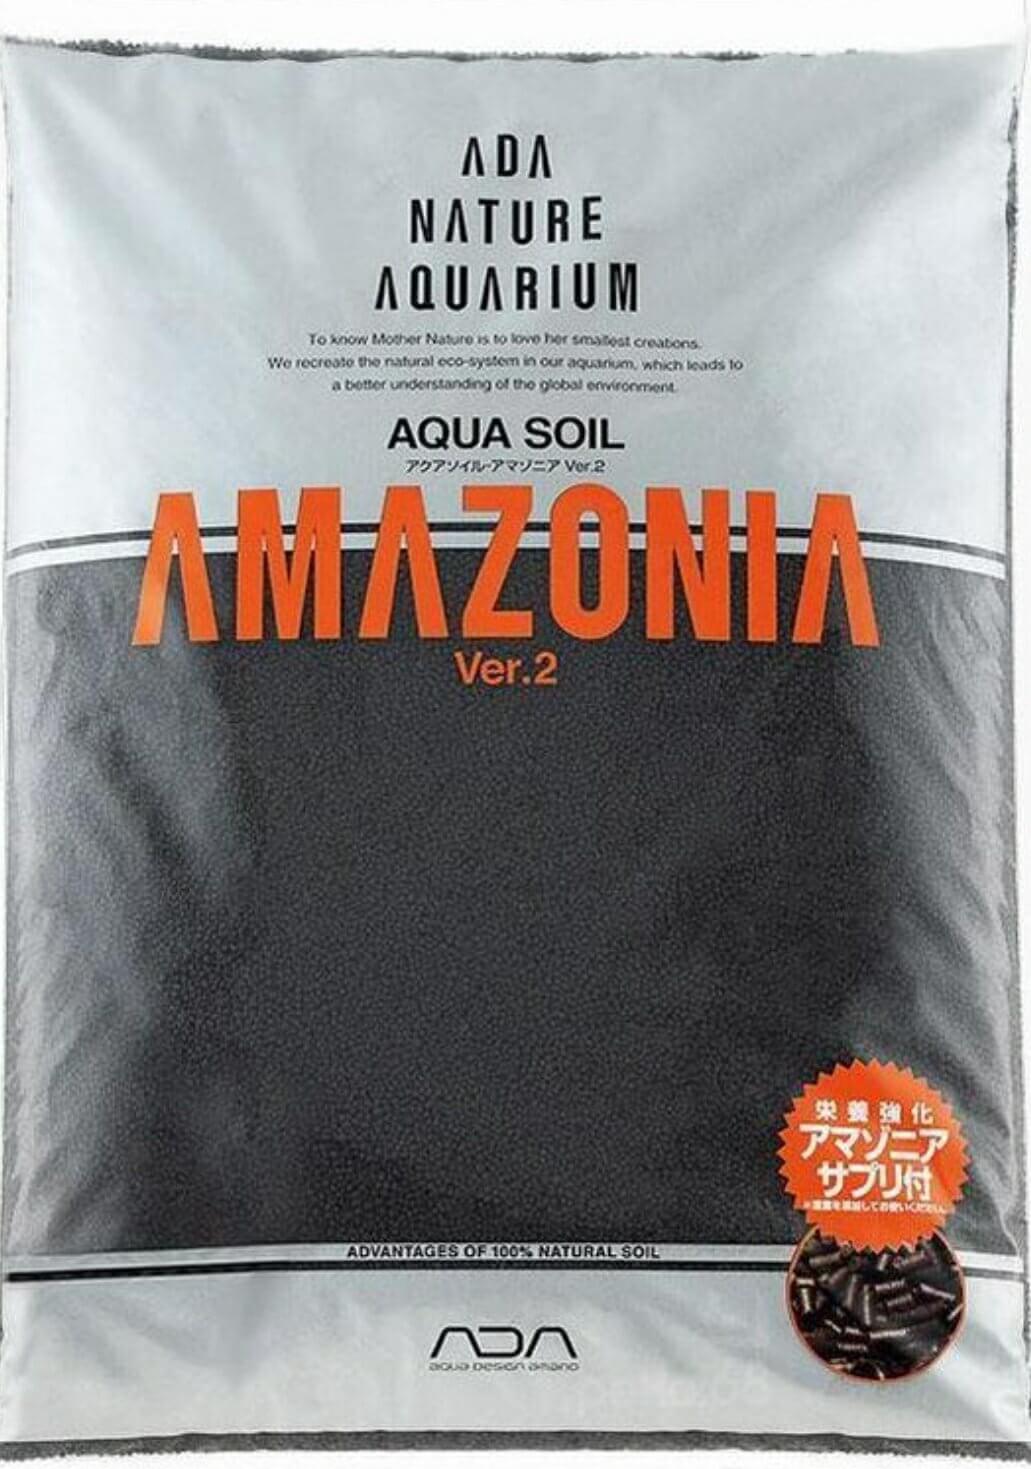 Aquasoil Aquarium